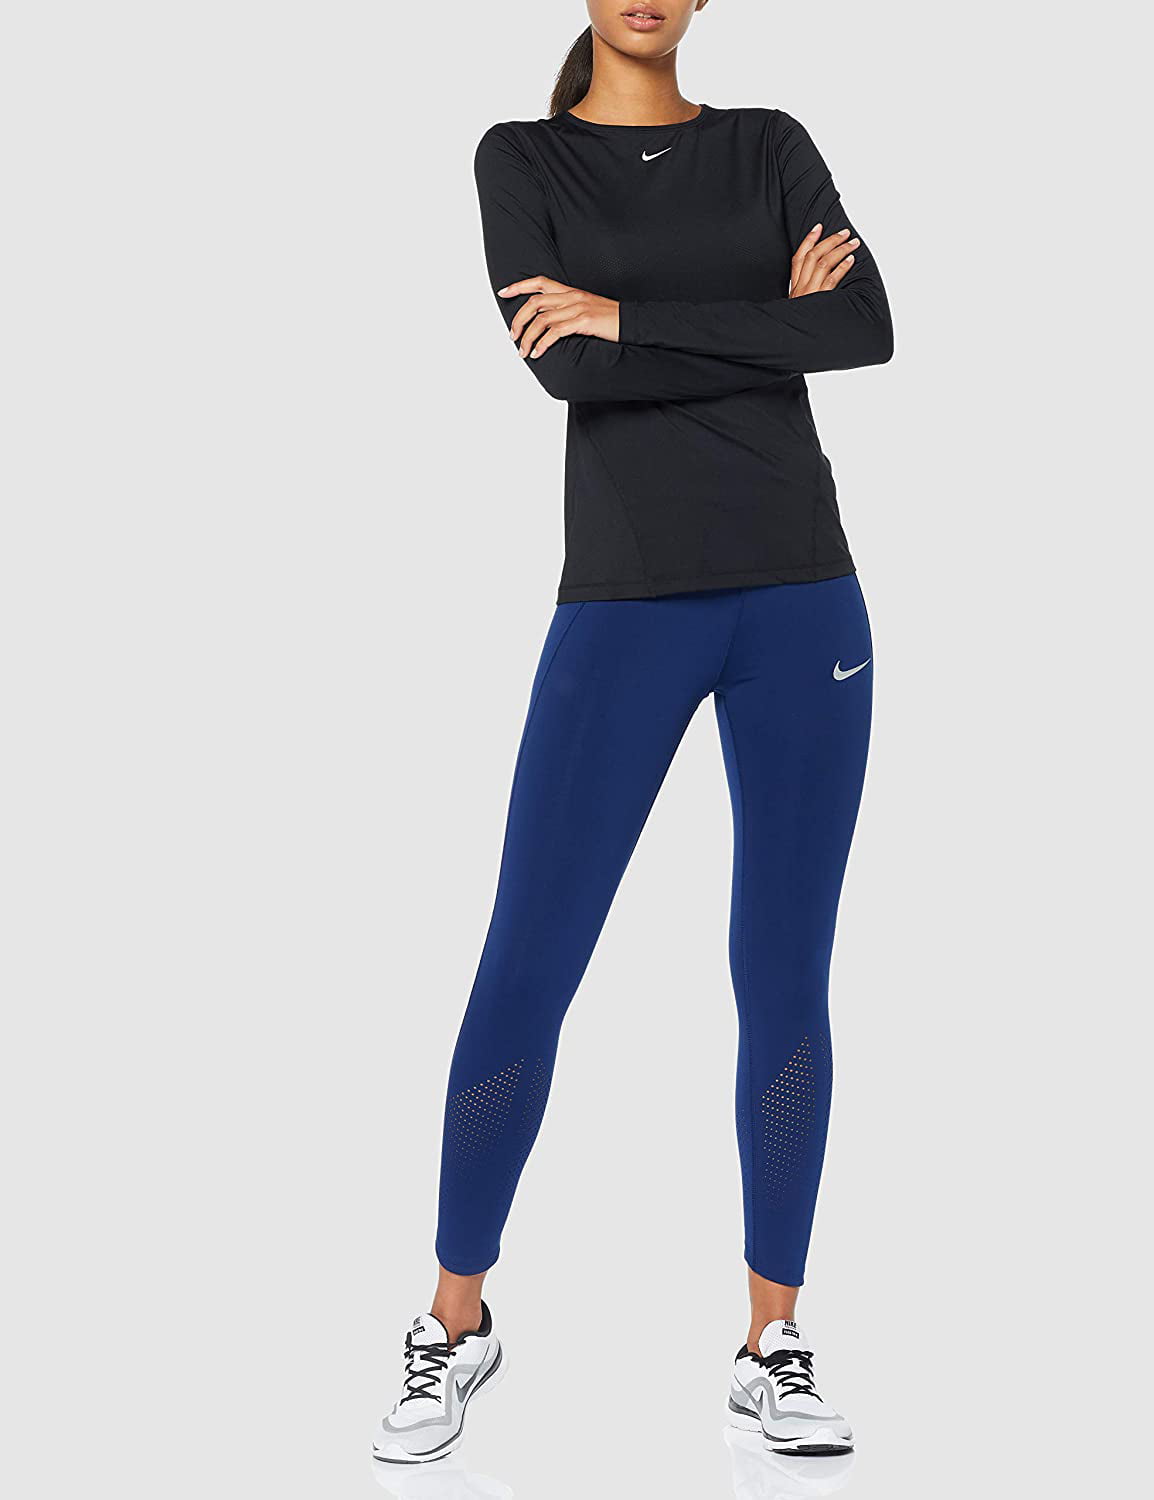 Women's Nike Pro Long-Sleeve Mesh Top - Black - Size M